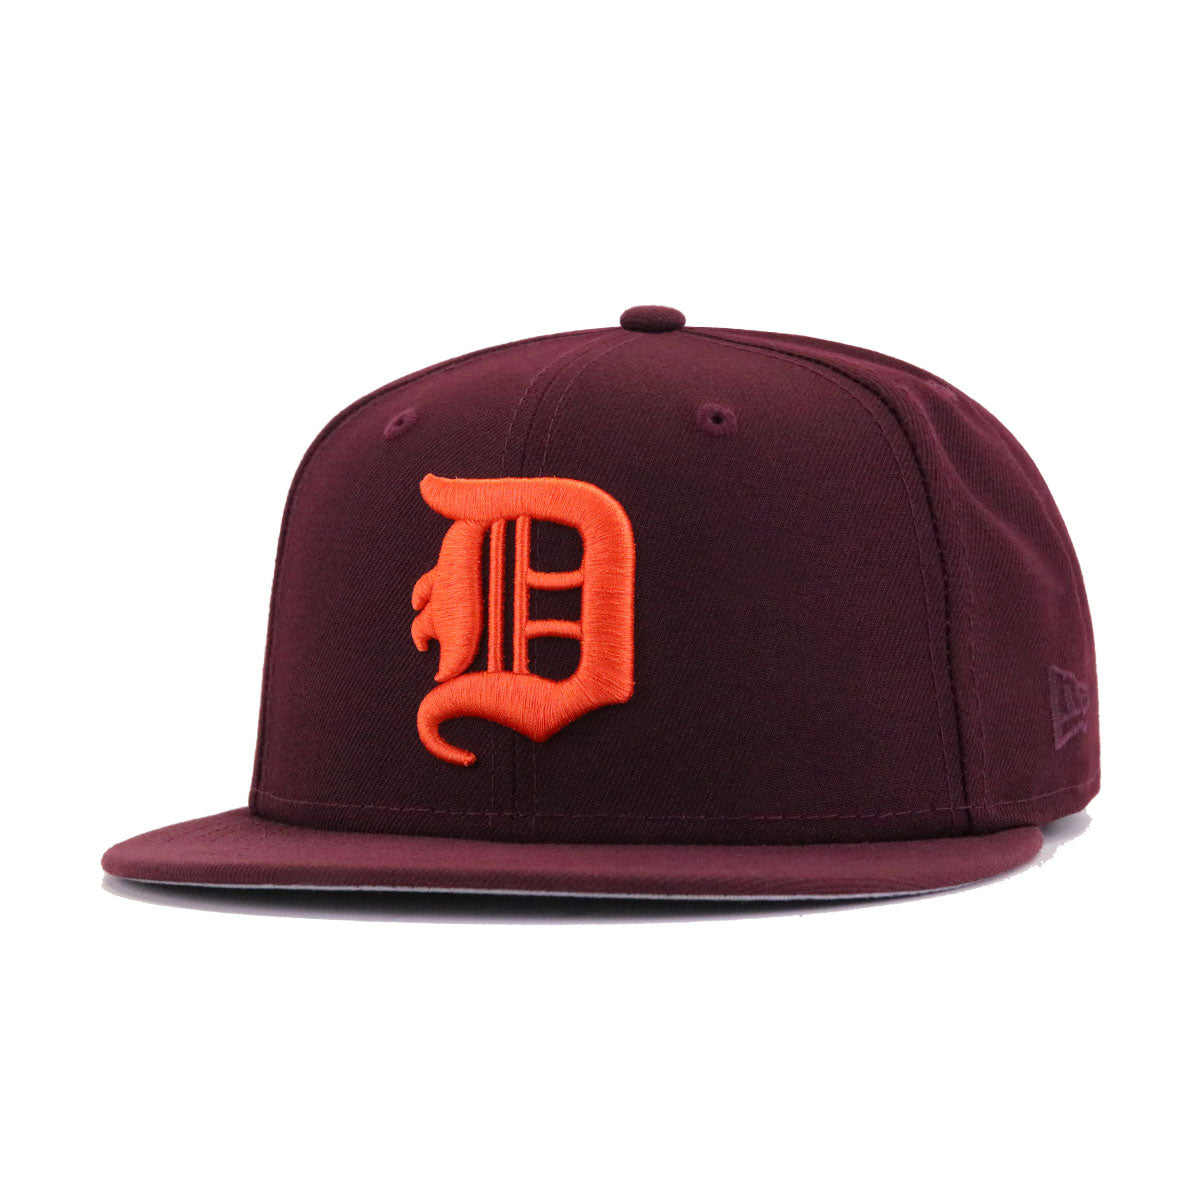 Detroit Baseball Hat Maroon 1905 New Era 59FIFTY Fitted Maroon / Orangeade / 7 7/8